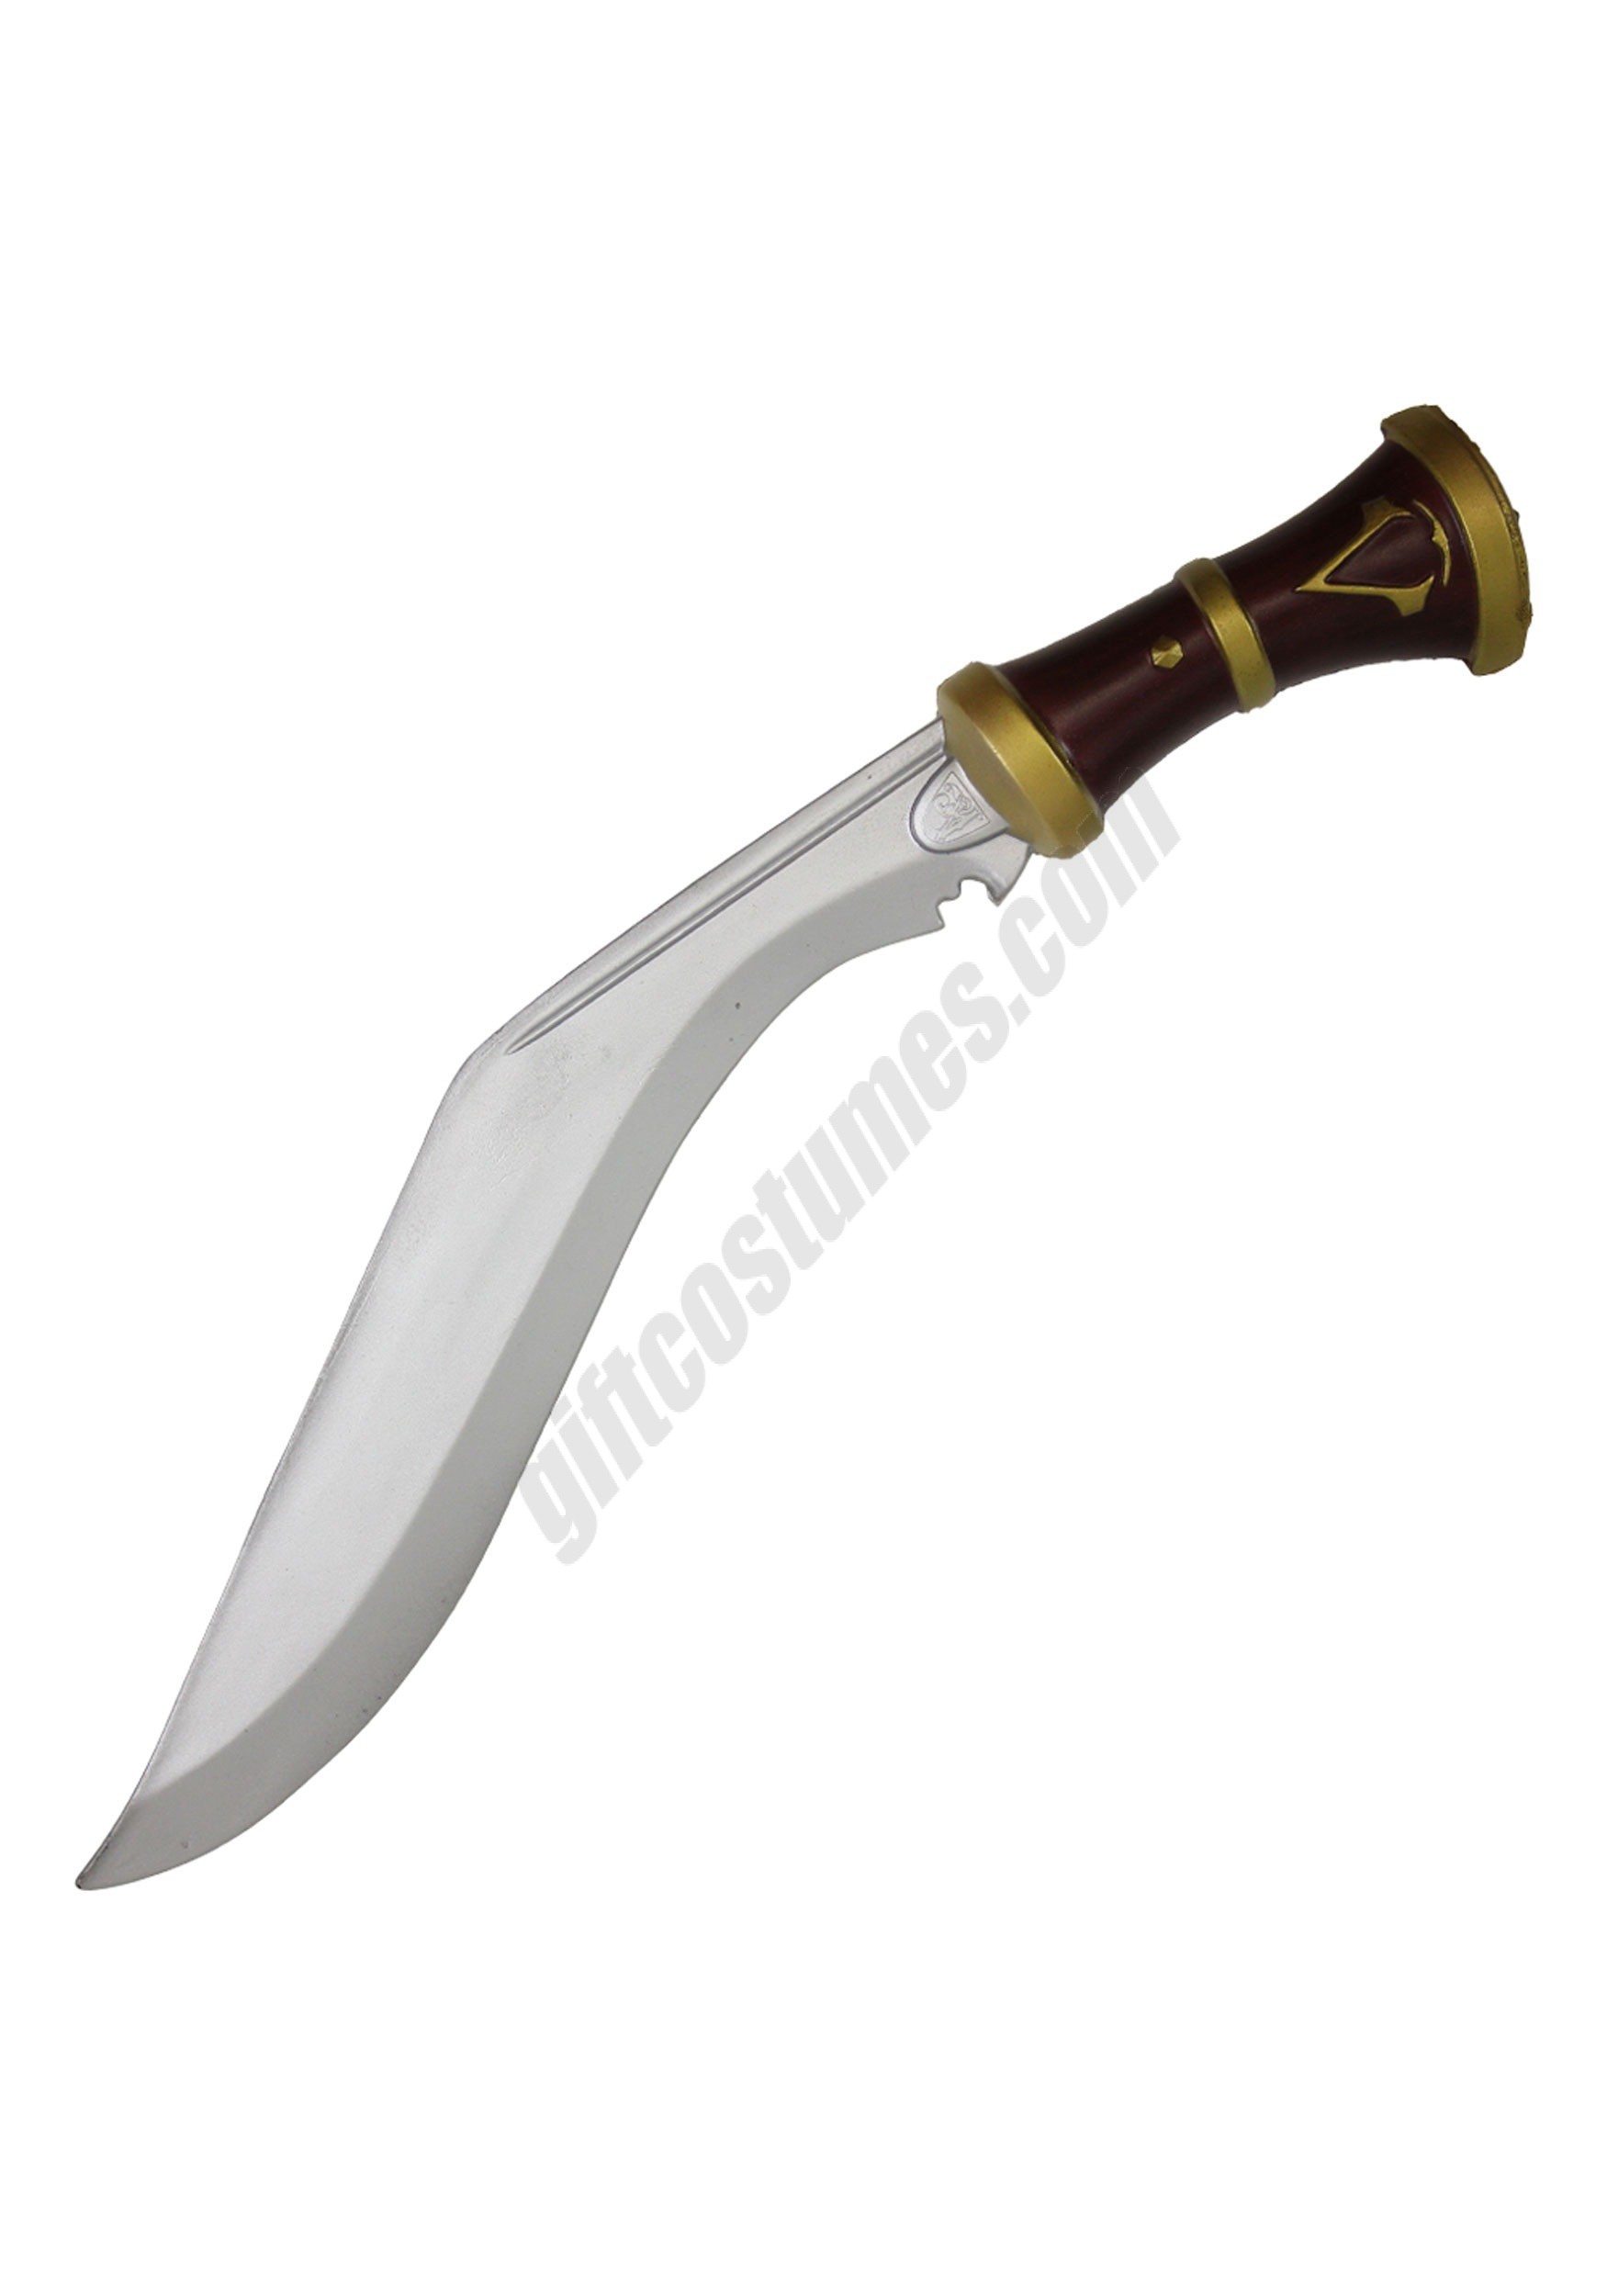 Assassin's Creed Foam Kukri Weapon Promotions - Assassin's Creed Foam Kukri Weapon Promotions